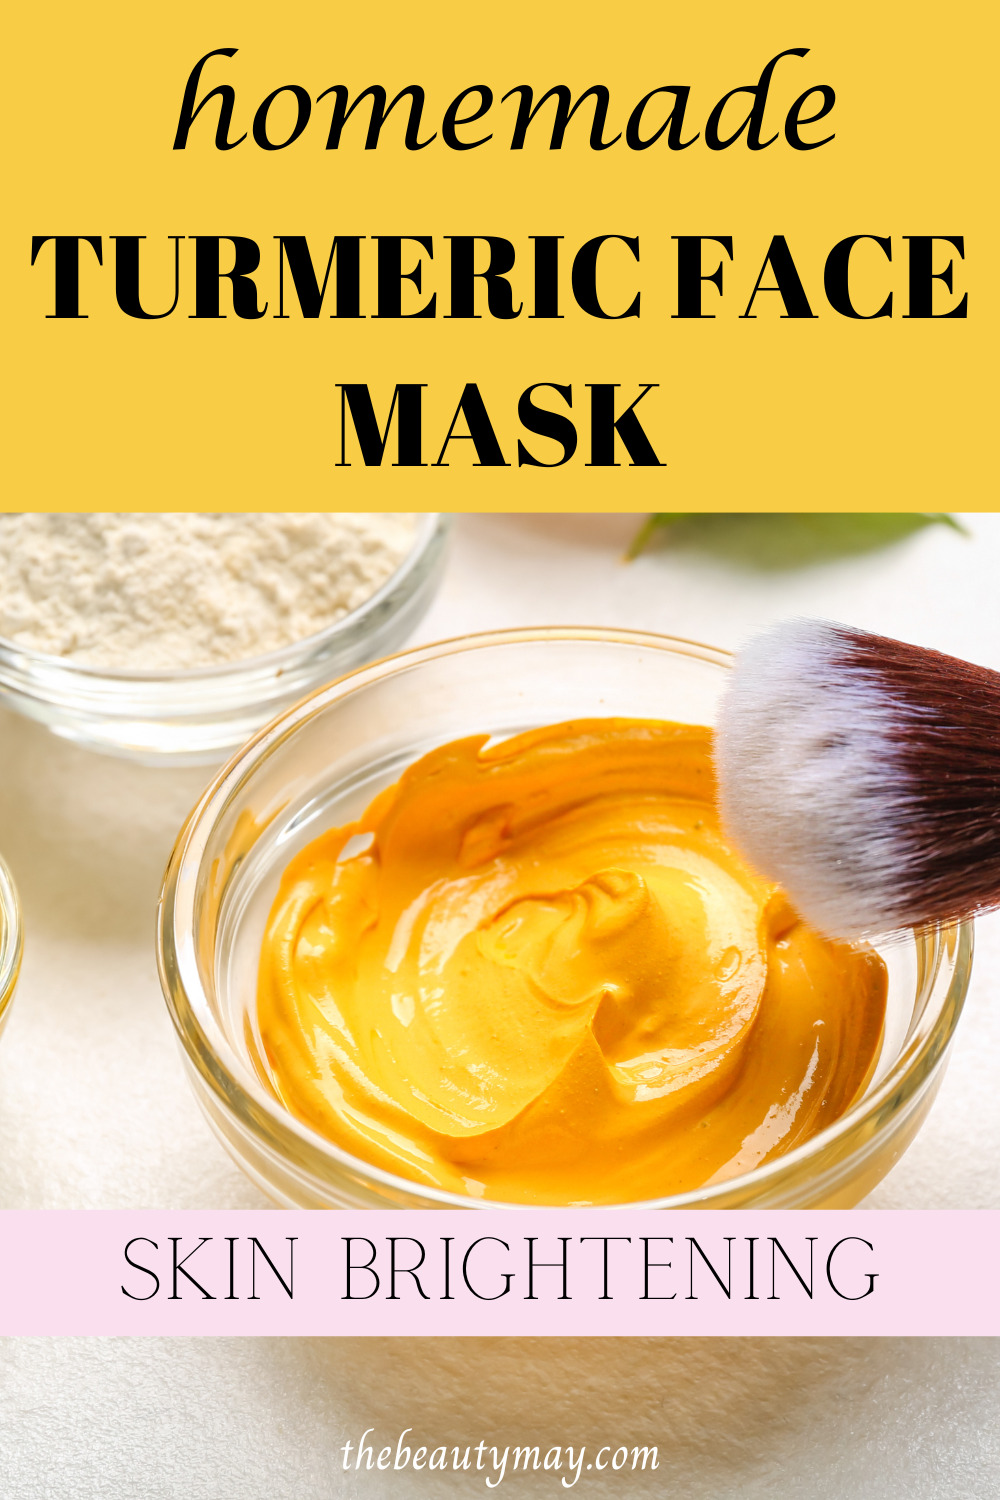 homemade turmeric face mask benefits